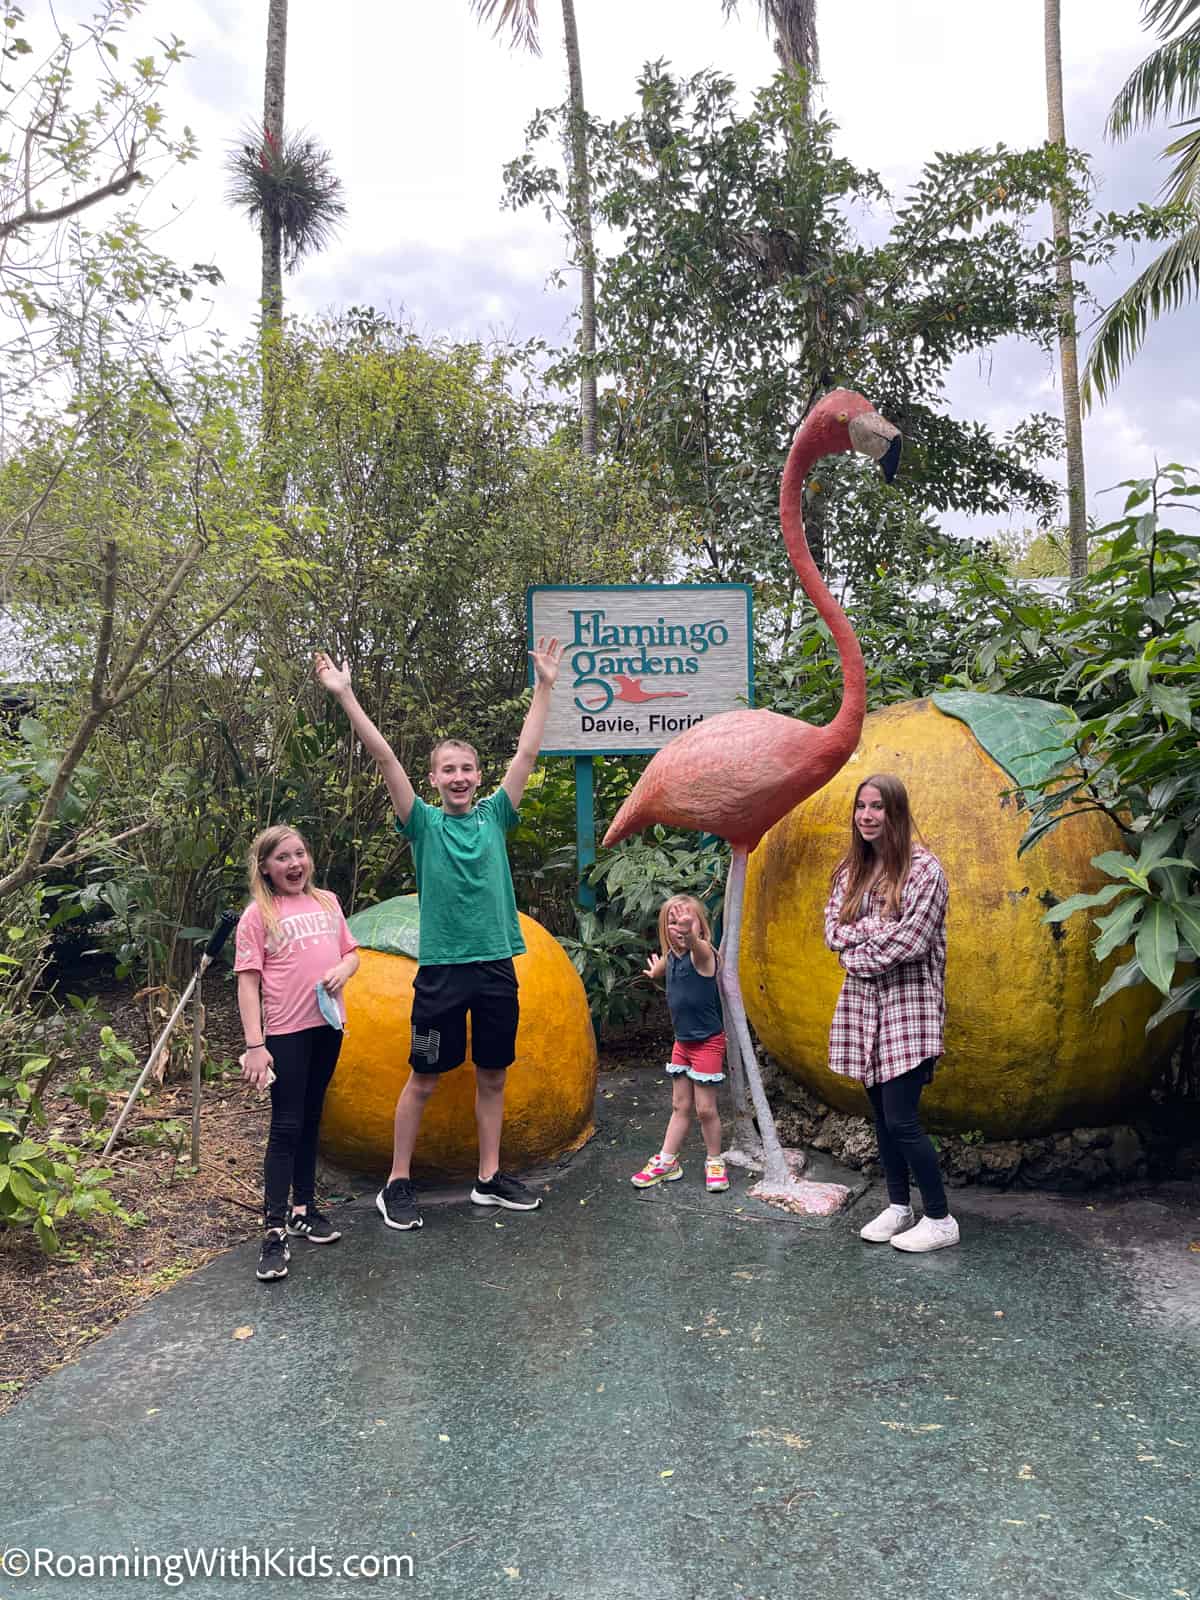 Visiting Flamingo Gardens in Davie, Florida